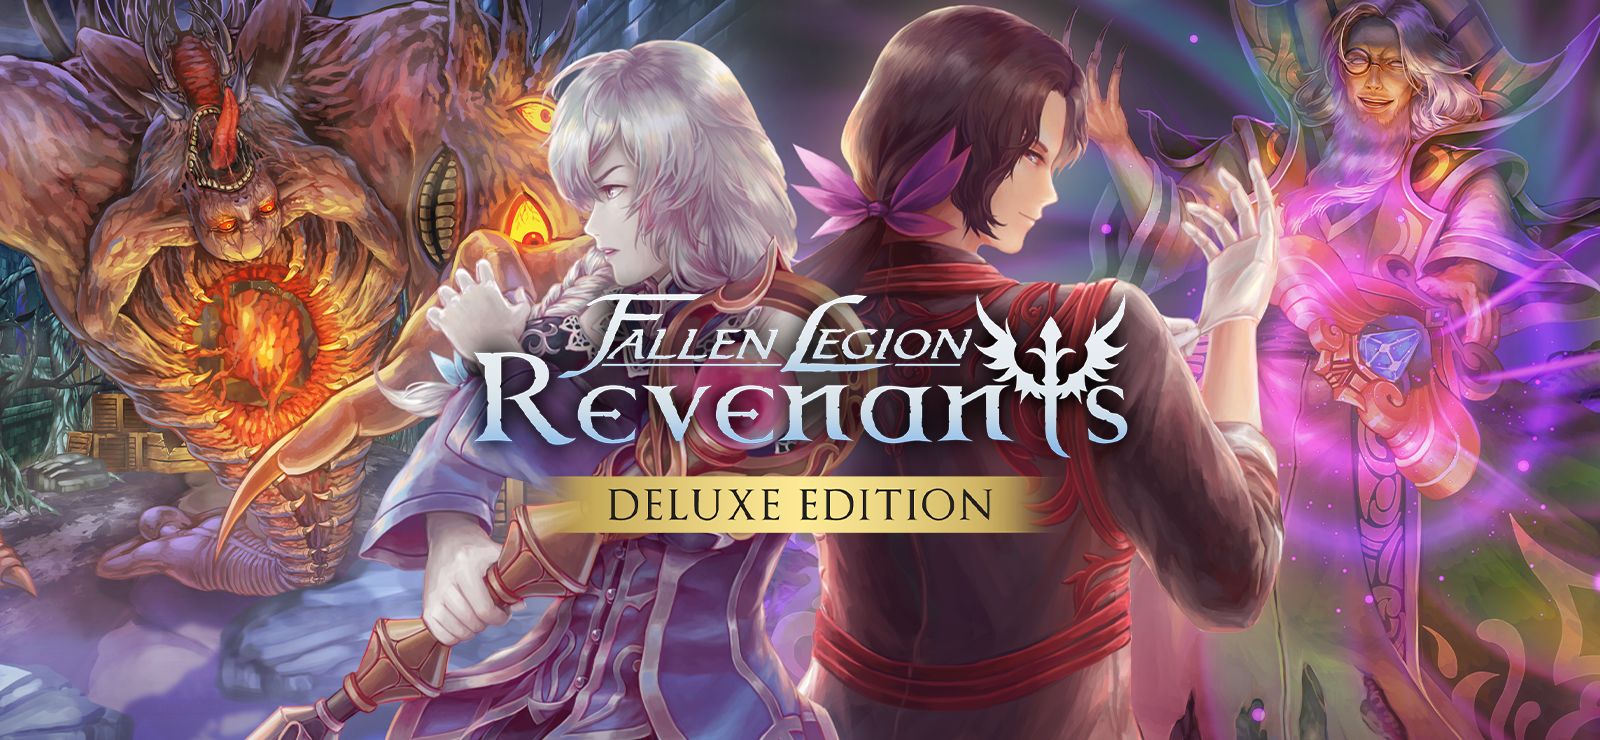 Fallen Legion Revenants Digital Deluxe Edition